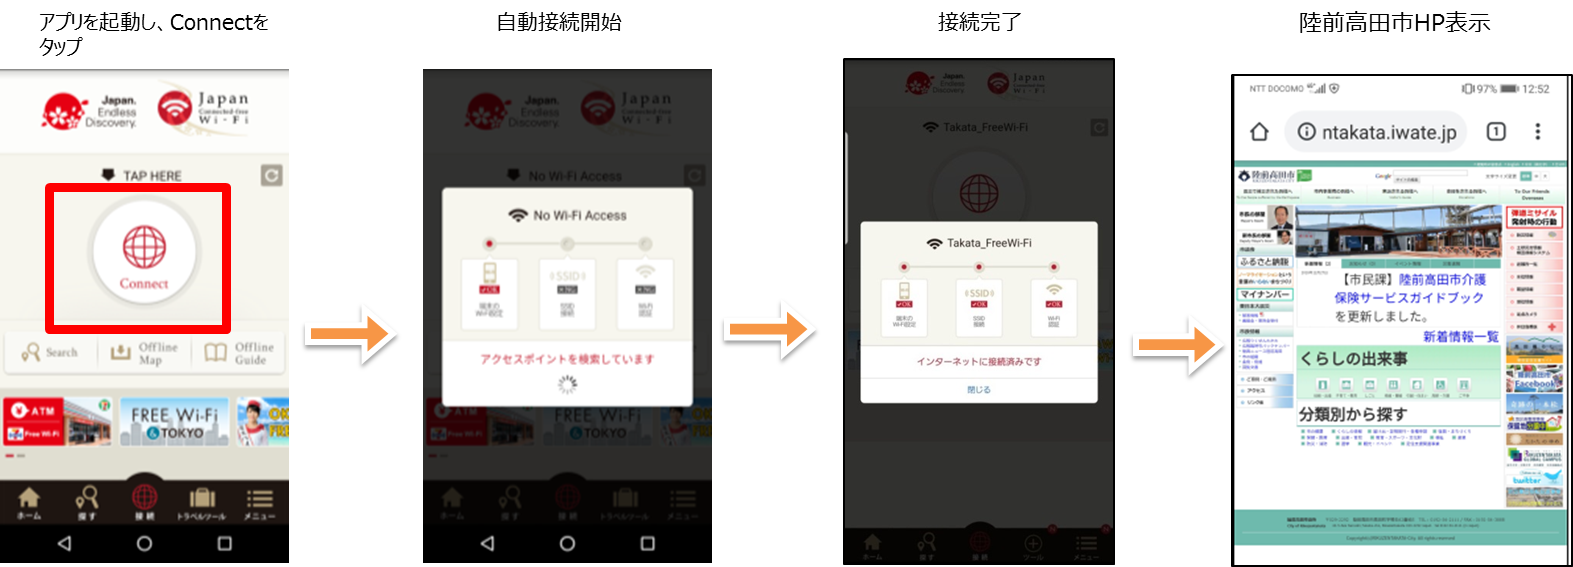 Japan Connected-free Wi-Fiアプリでの接続に関するフロー図